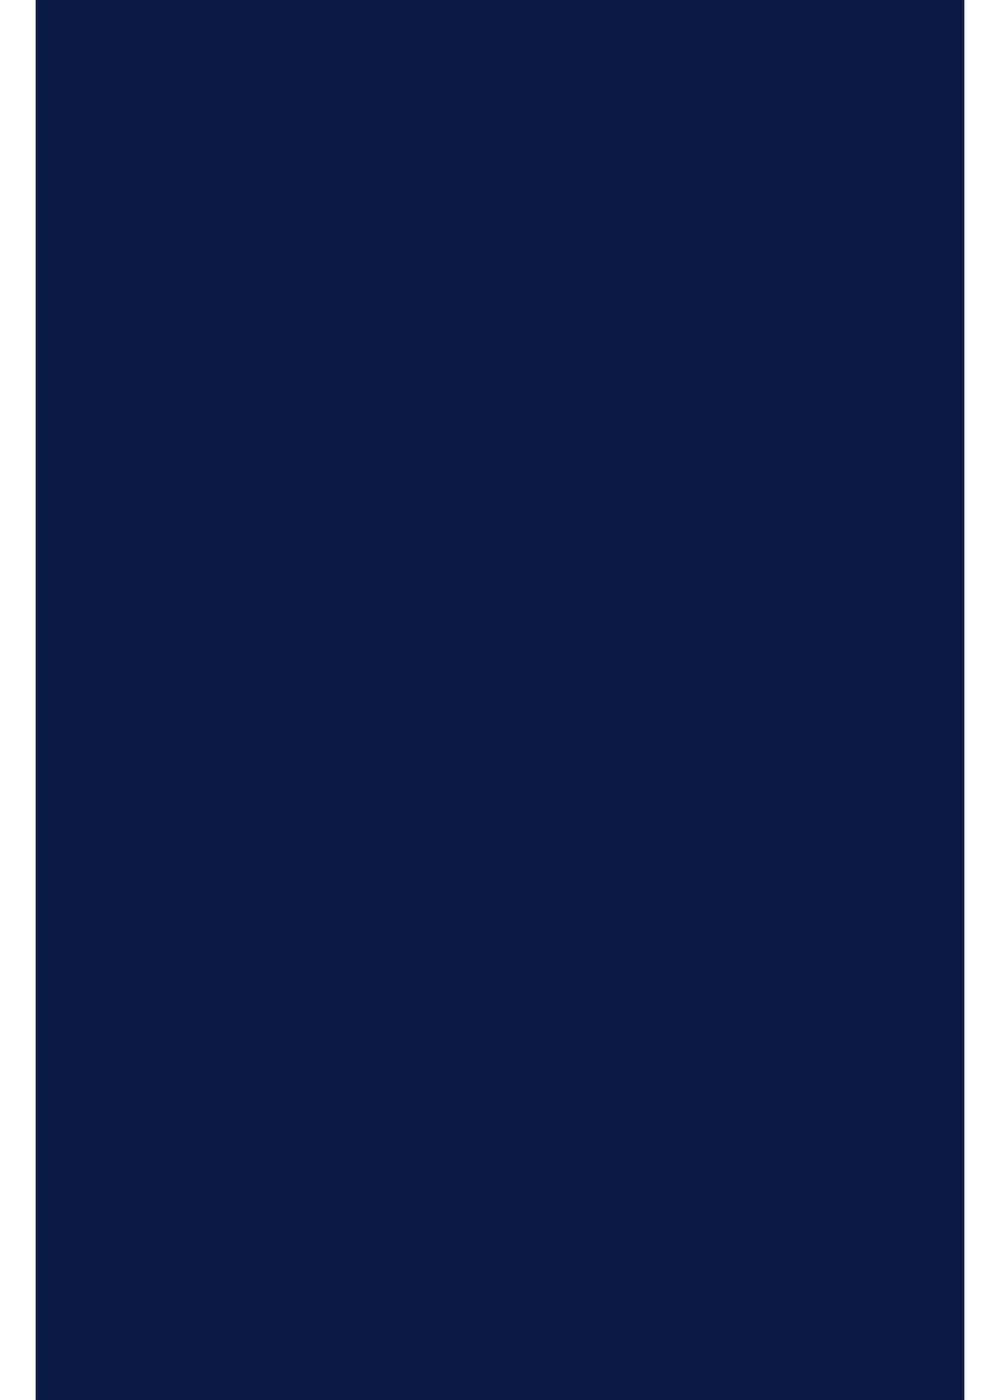 Hilltop Transparentpapier A4 perfekt - zum Plottern Navy zum Aufbügeln Transferfolie/Textilfolie Blau